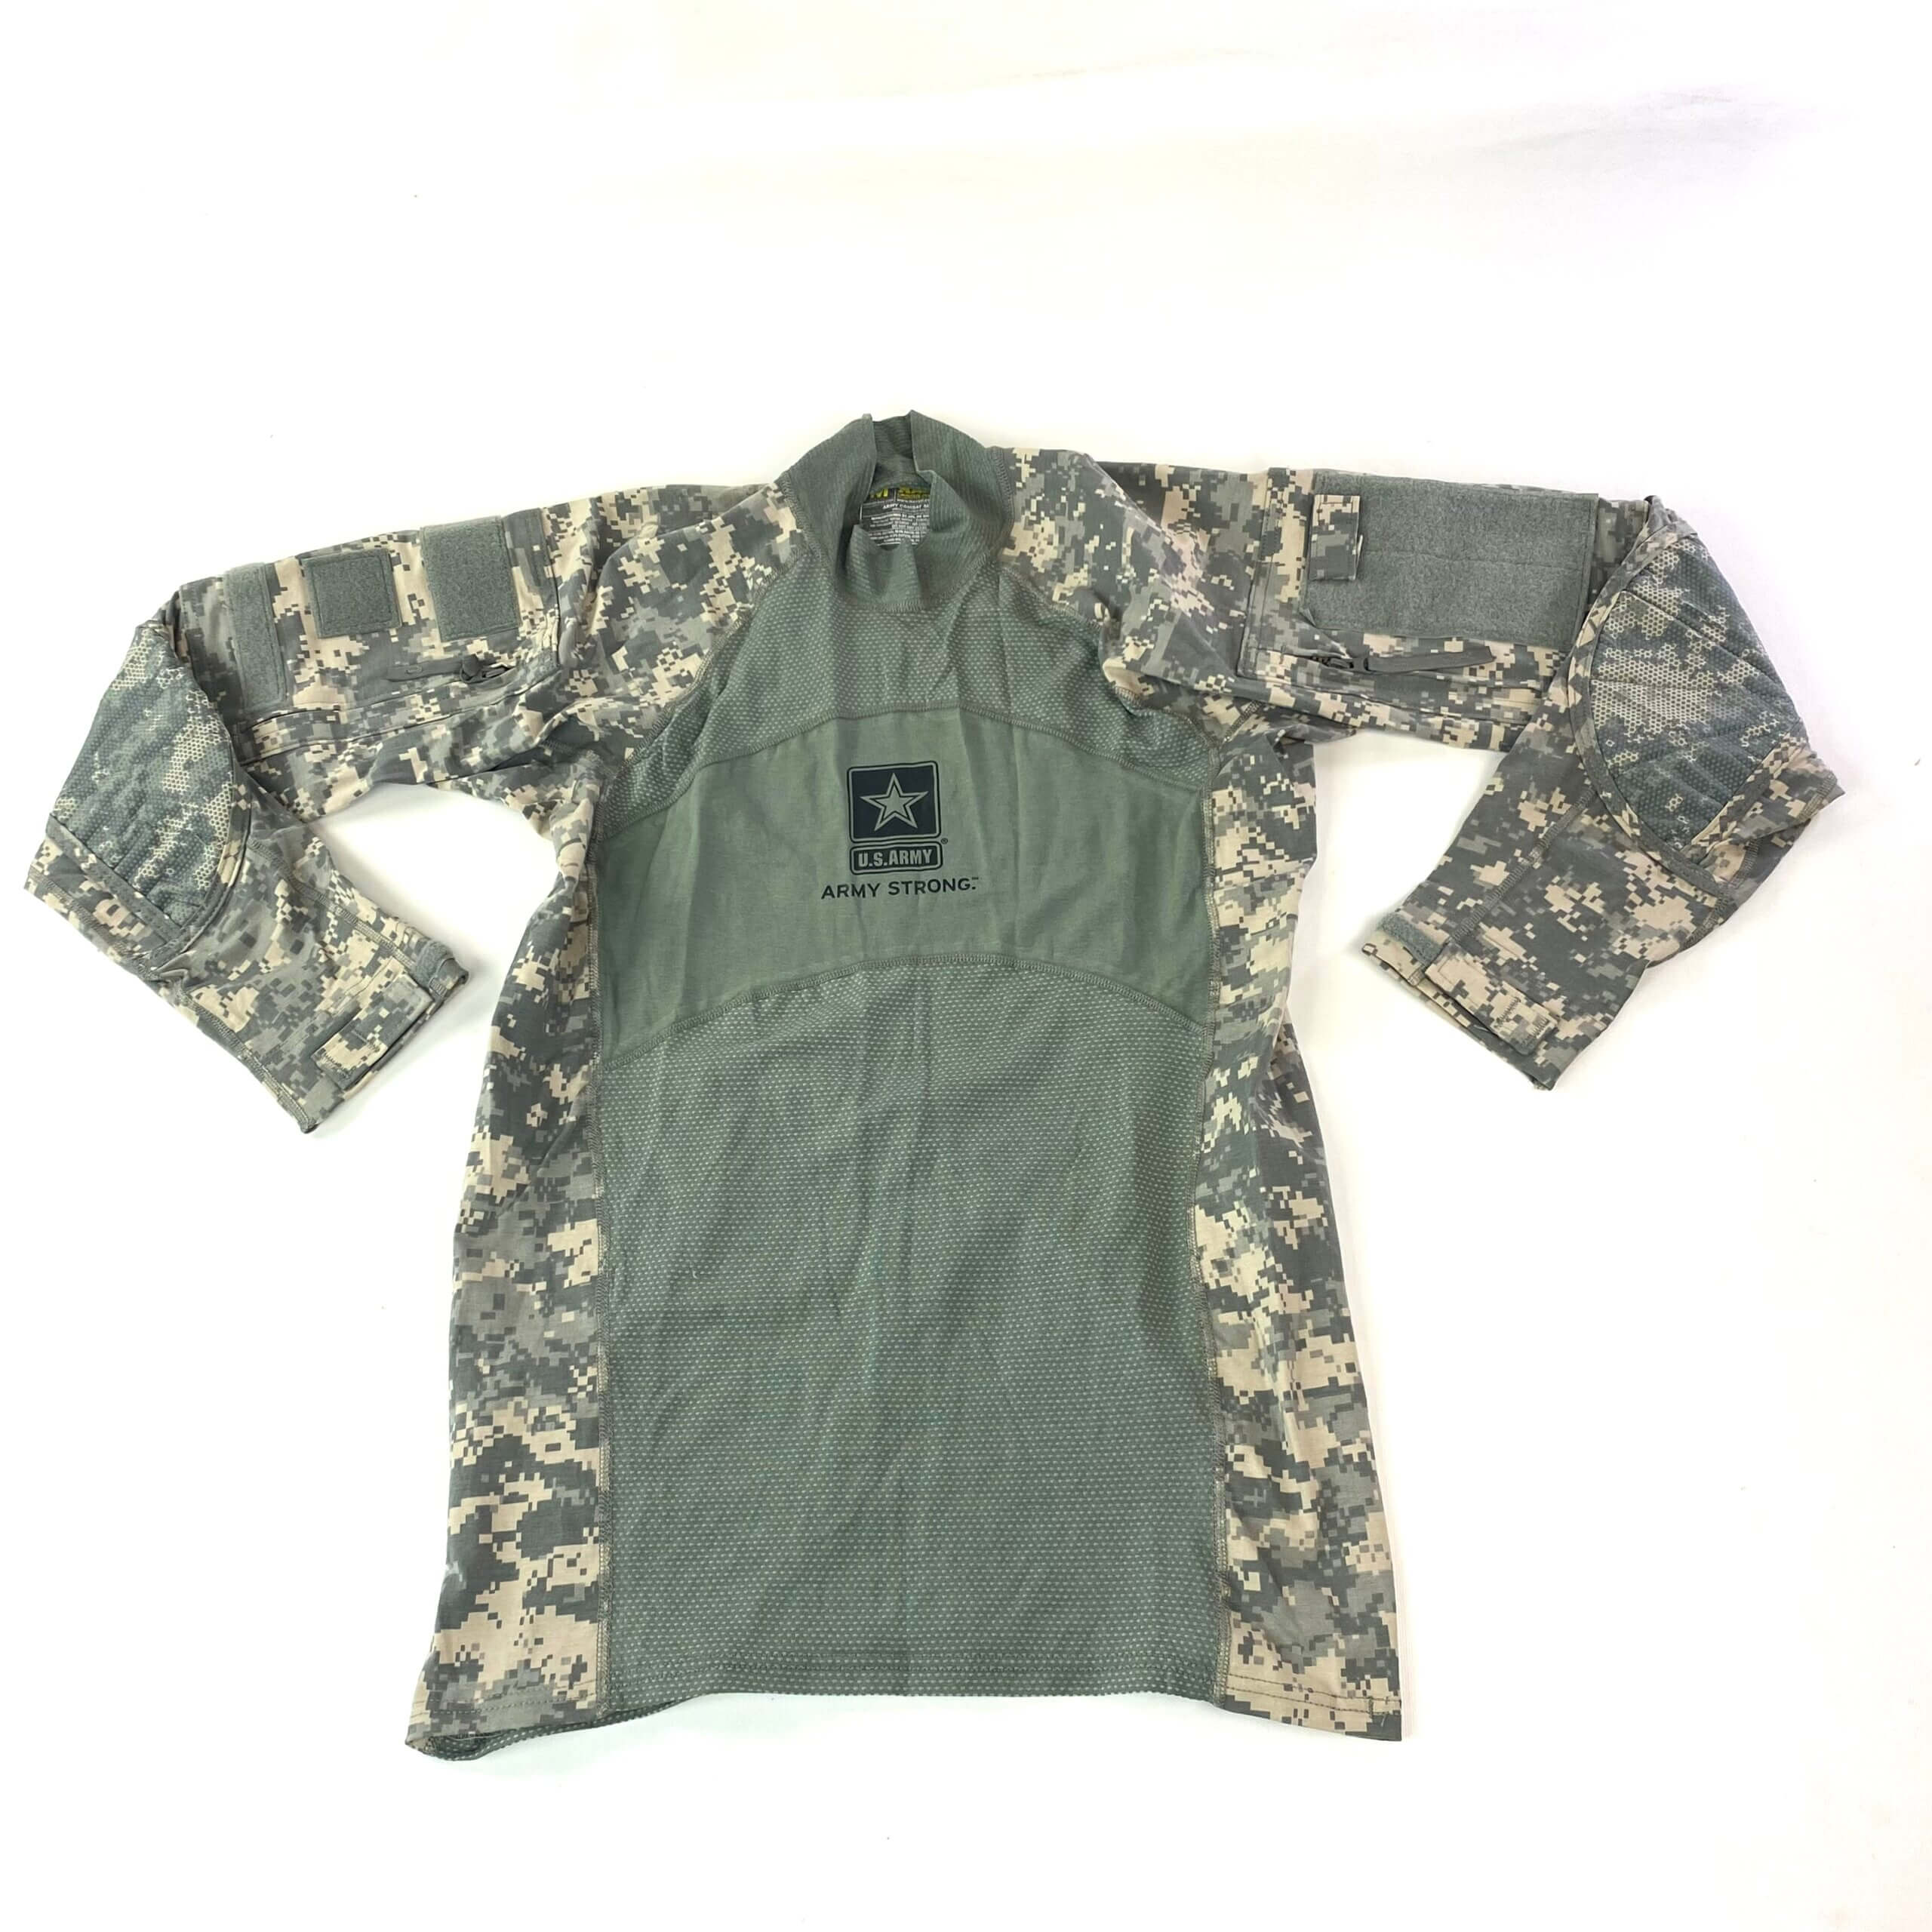 US Army MASSIF Combat Shirt - Venture Surplus - Genuine Issue